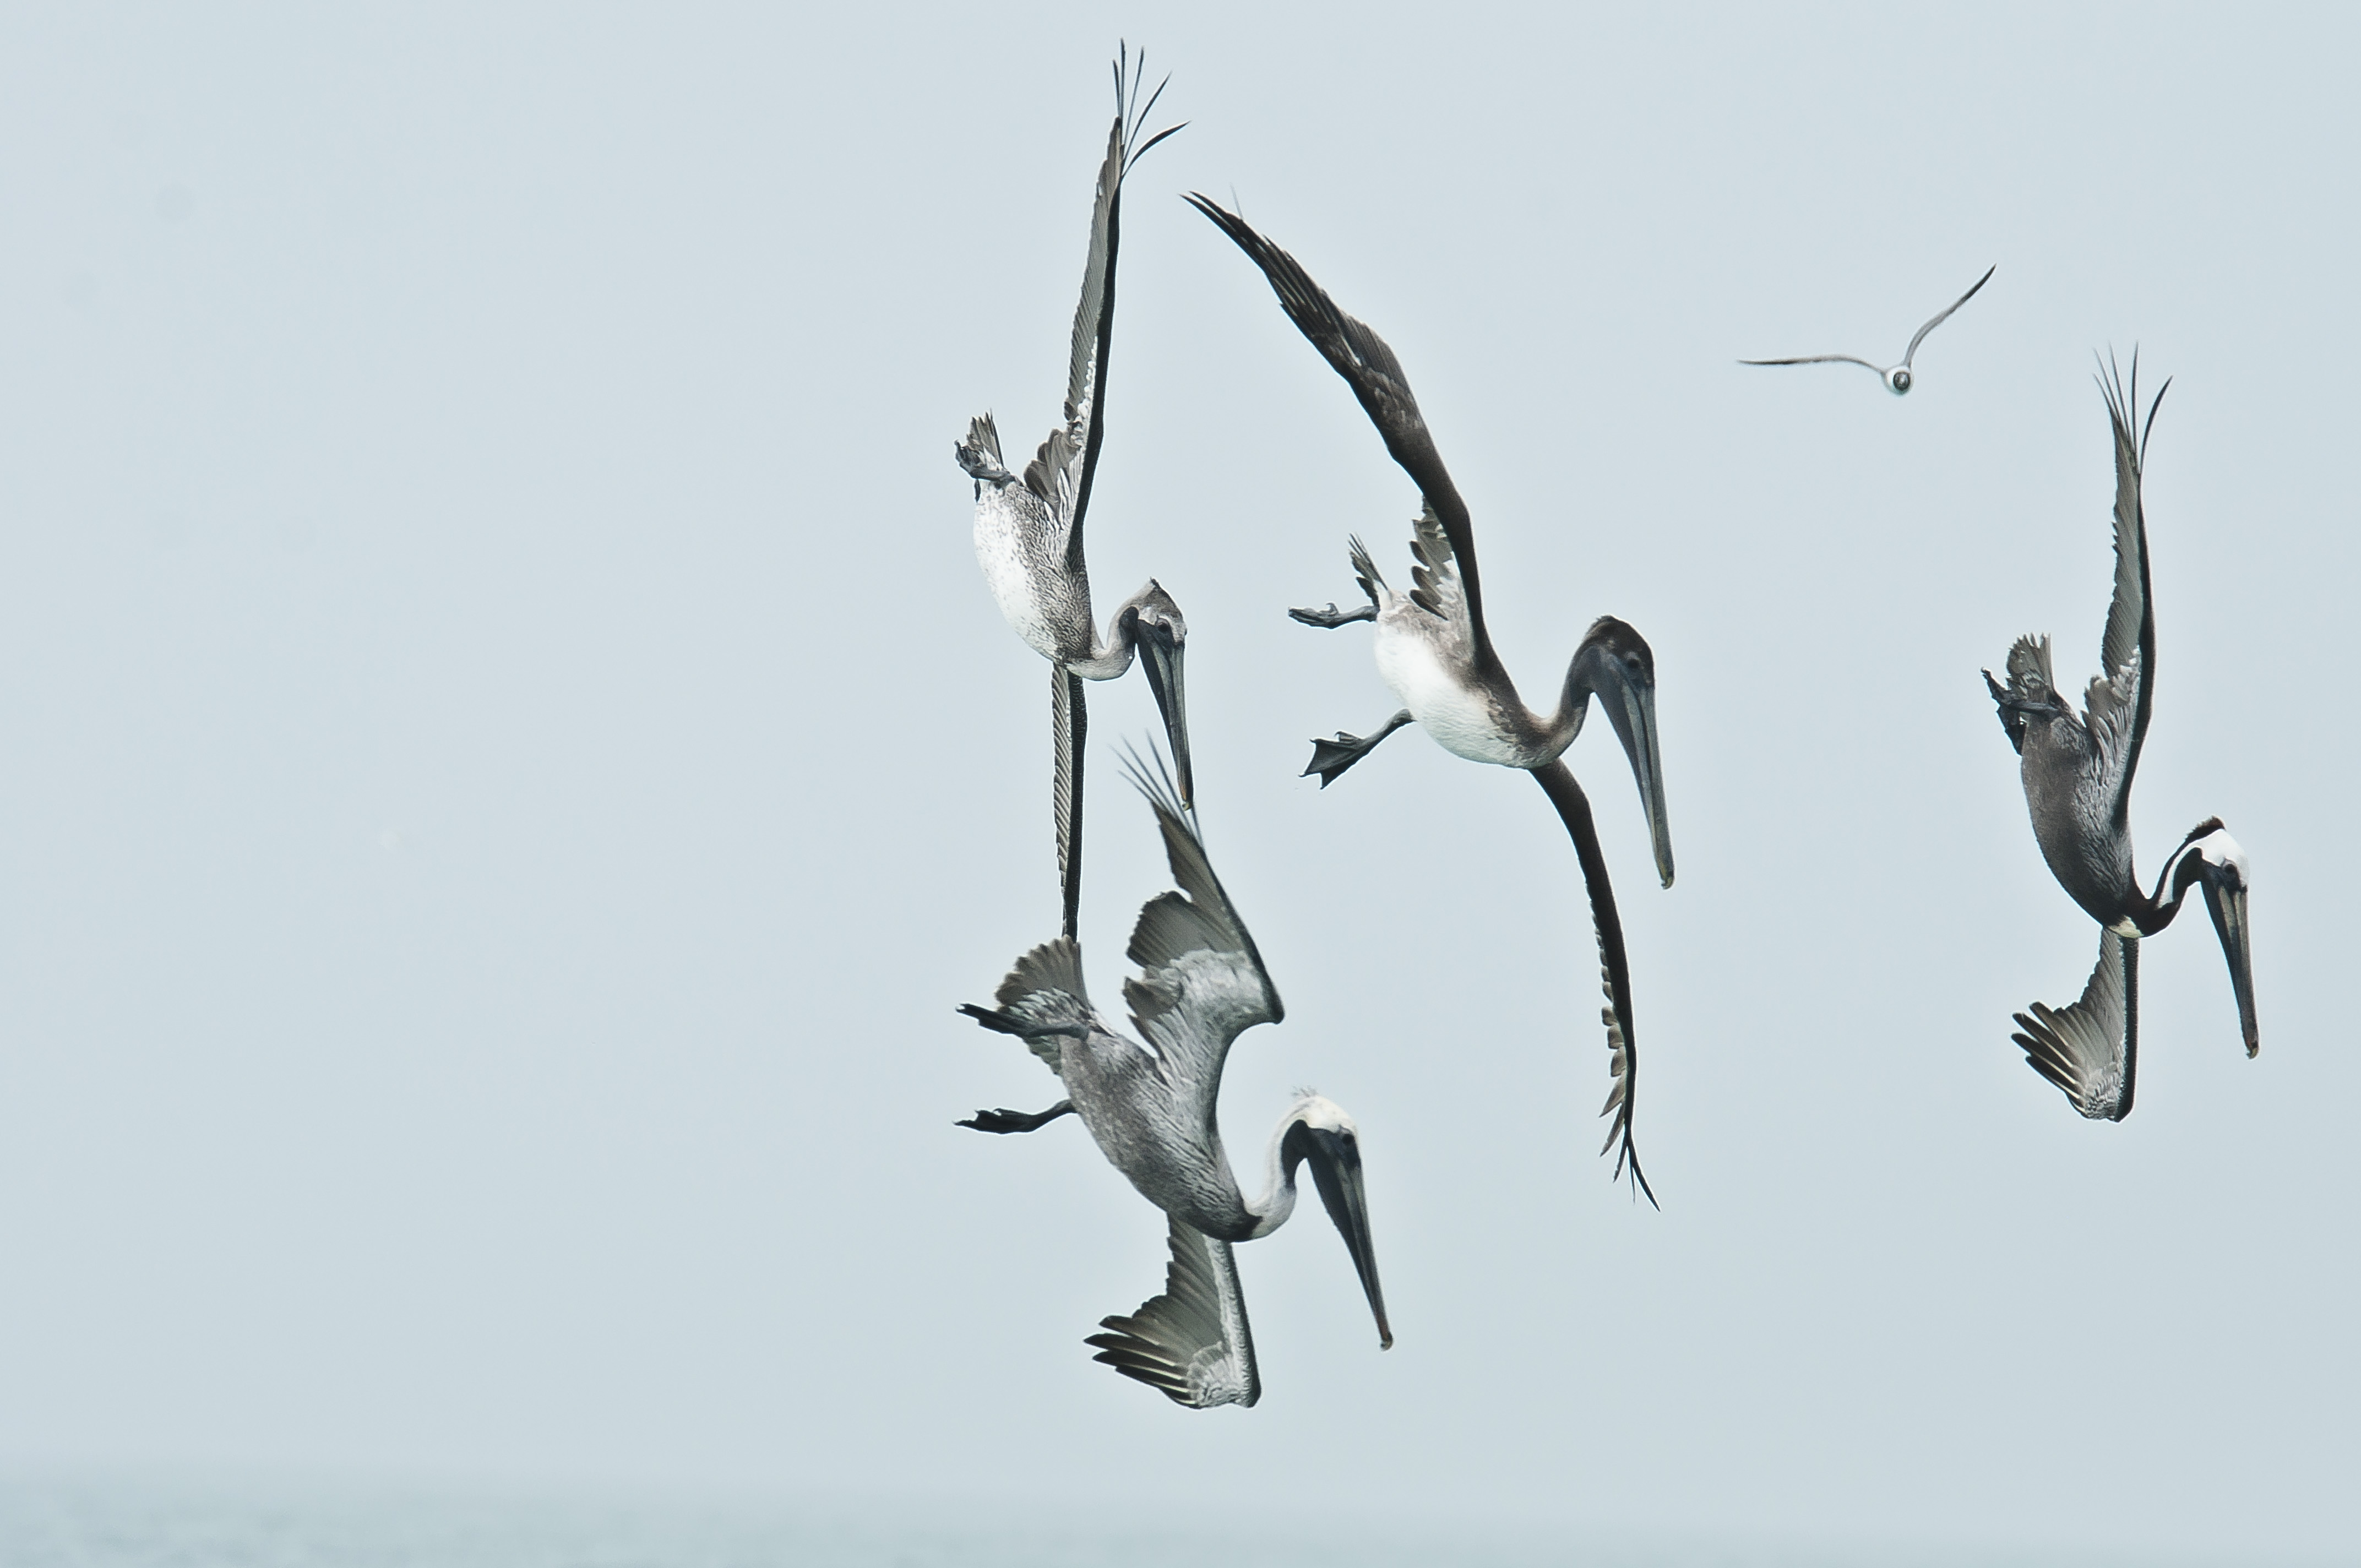 Pelicans diving